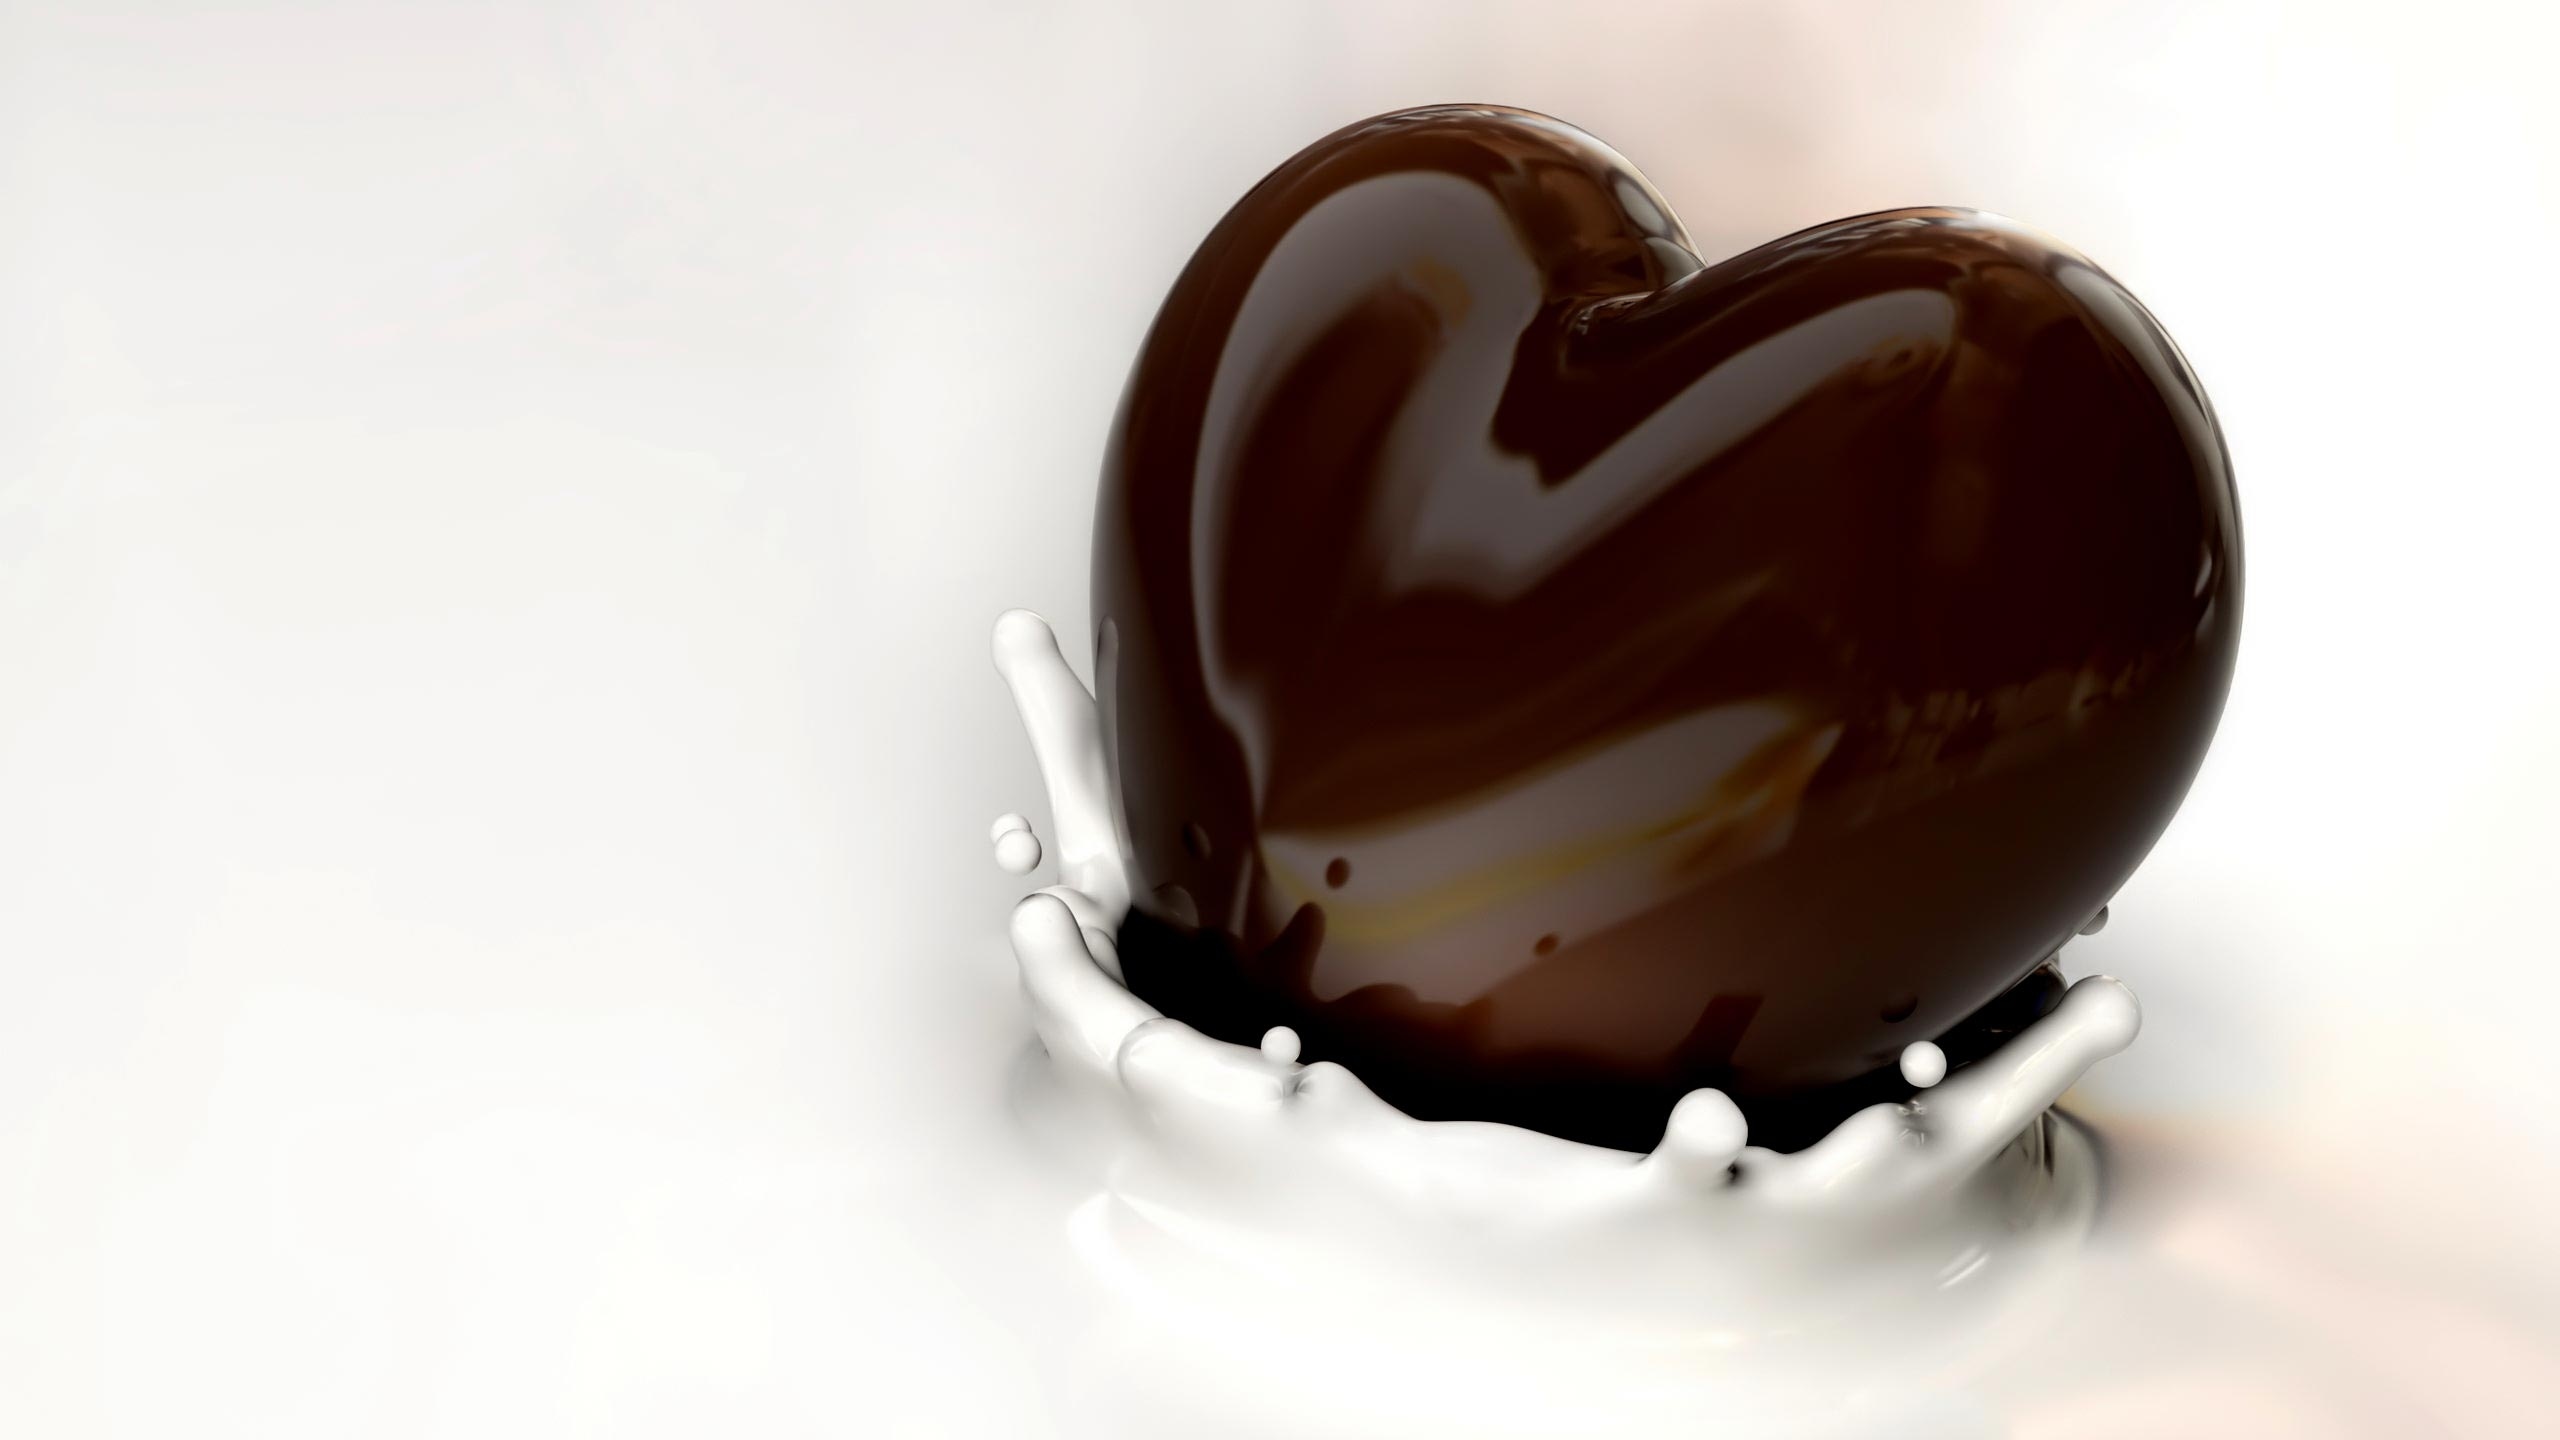 Heart Chocolate And Milk